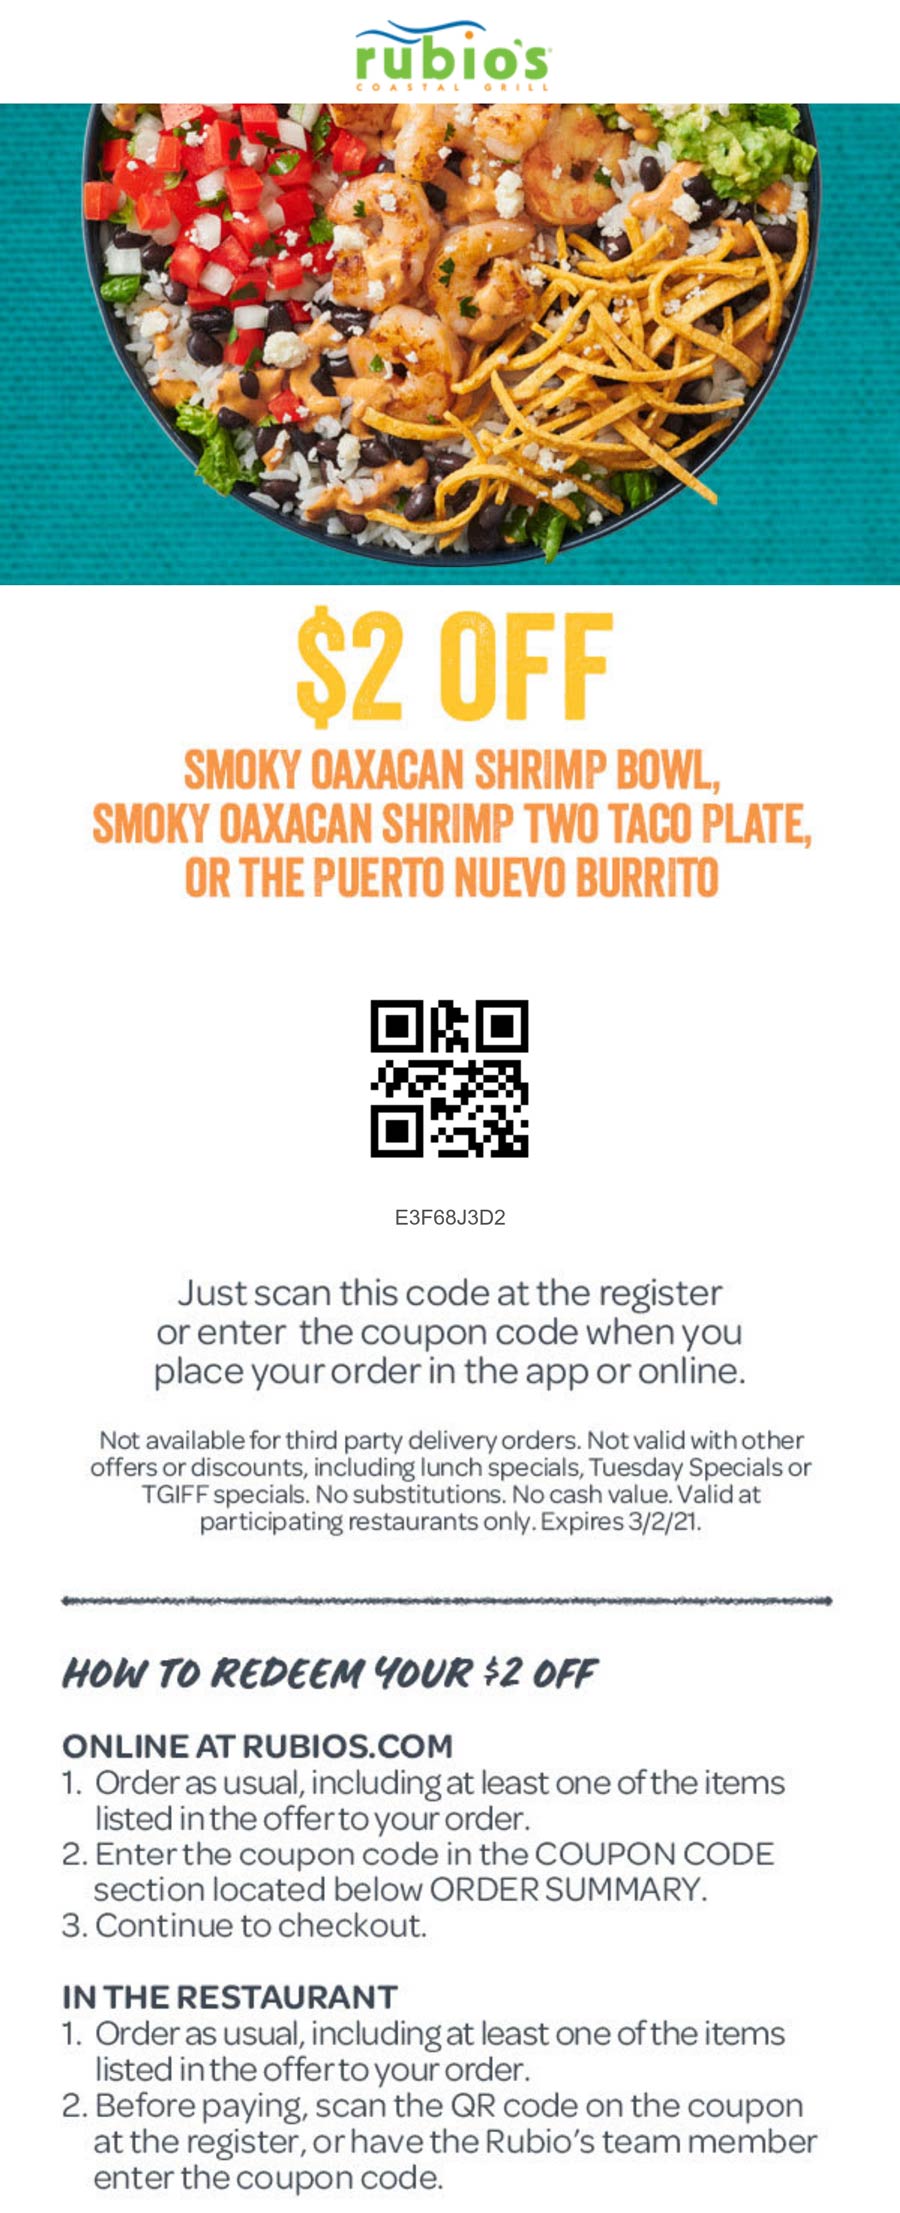 Rubios restaurants Coupon  $2 off a smoky shrimp bowl or taco plate at Rubios Coastal Grill #rubios 